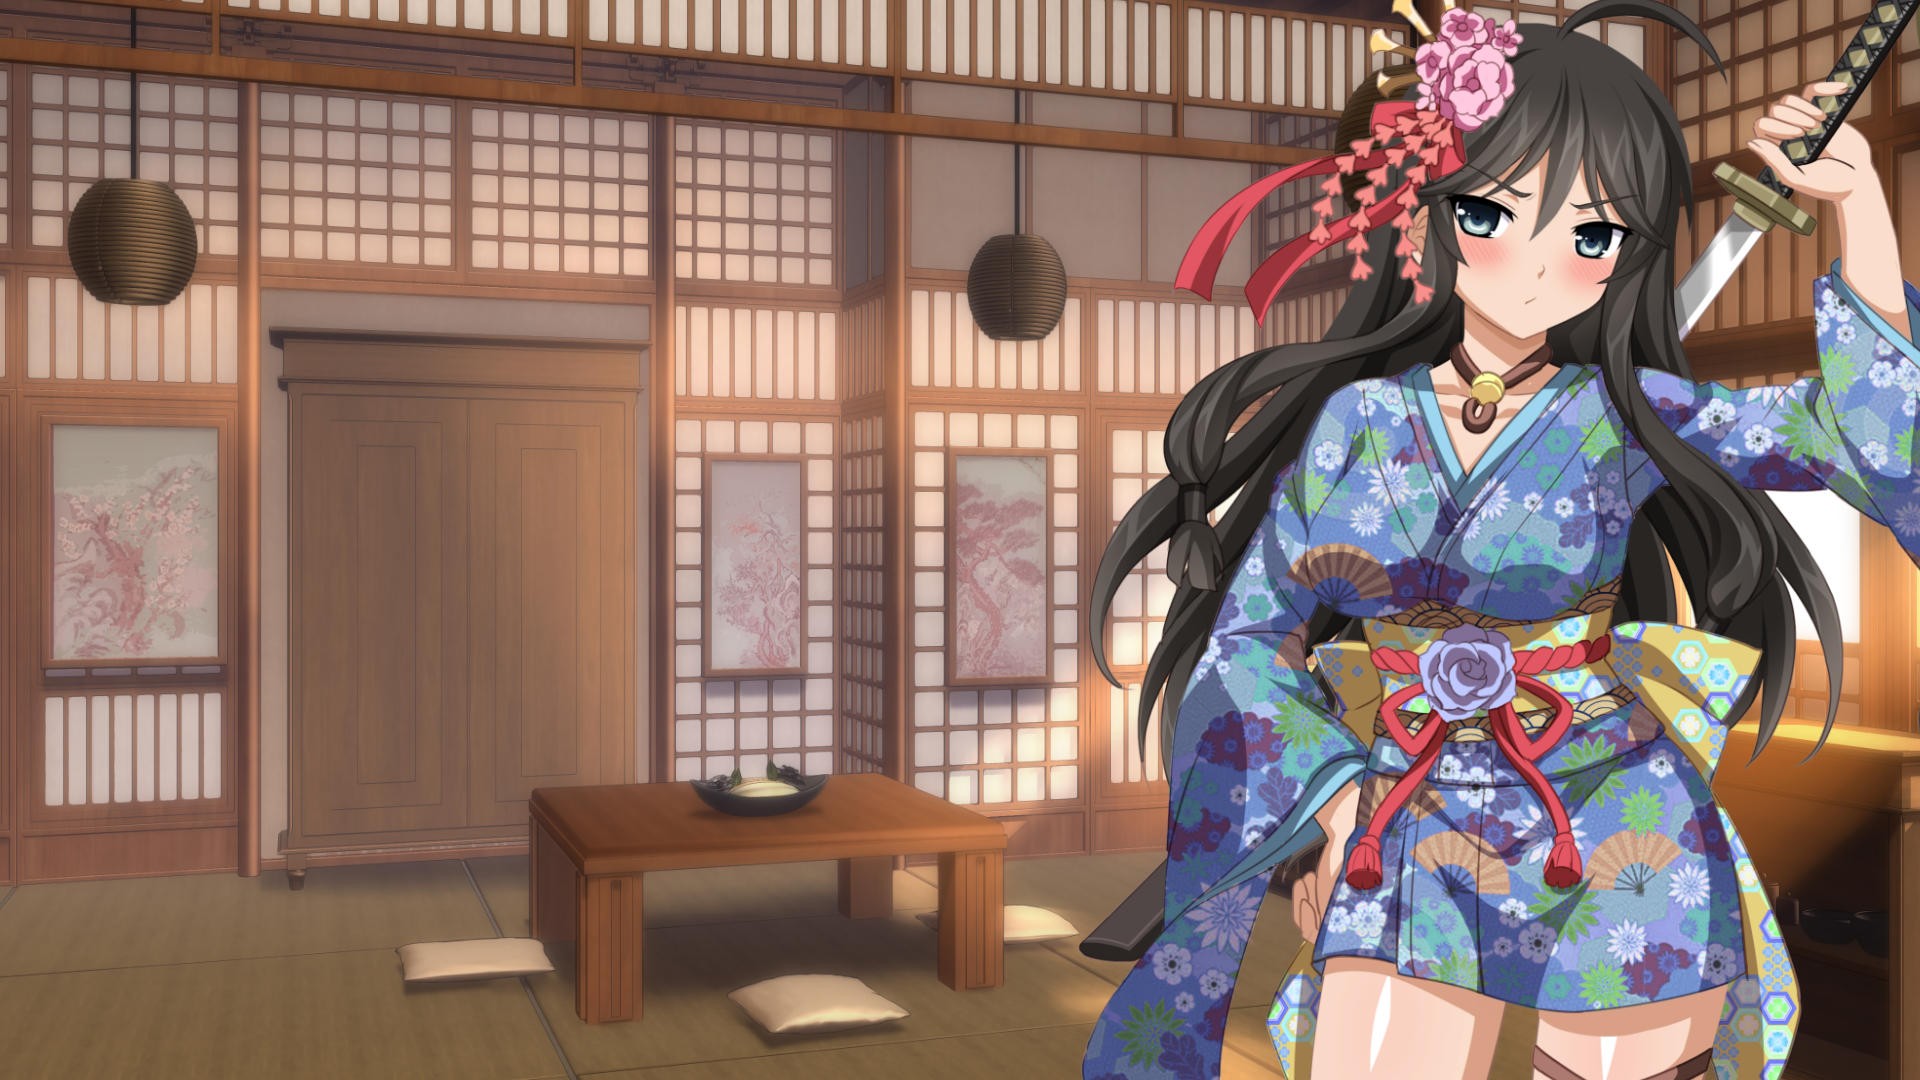 Anime 1920x1080 Sakura Spirit ecchi anime girls dark hair Asia long hair sword Japanese clothes